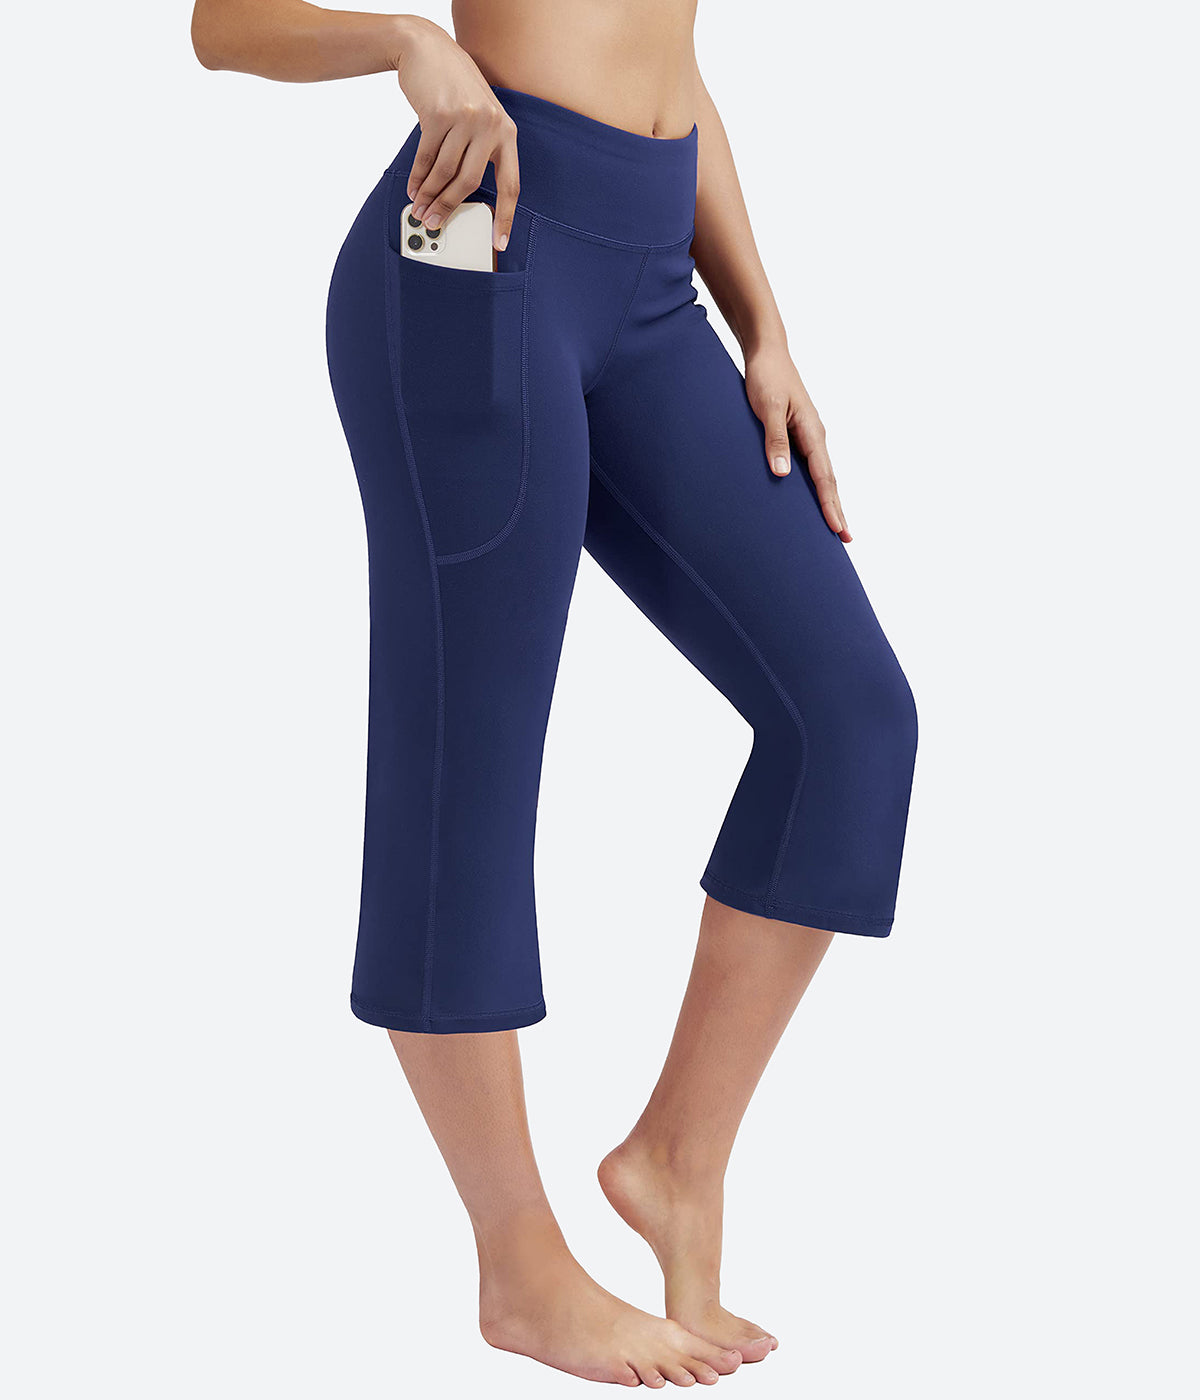 Women's 4/5 Length Zipper Pocket Capri Yoga Pant (Tropic Yellow